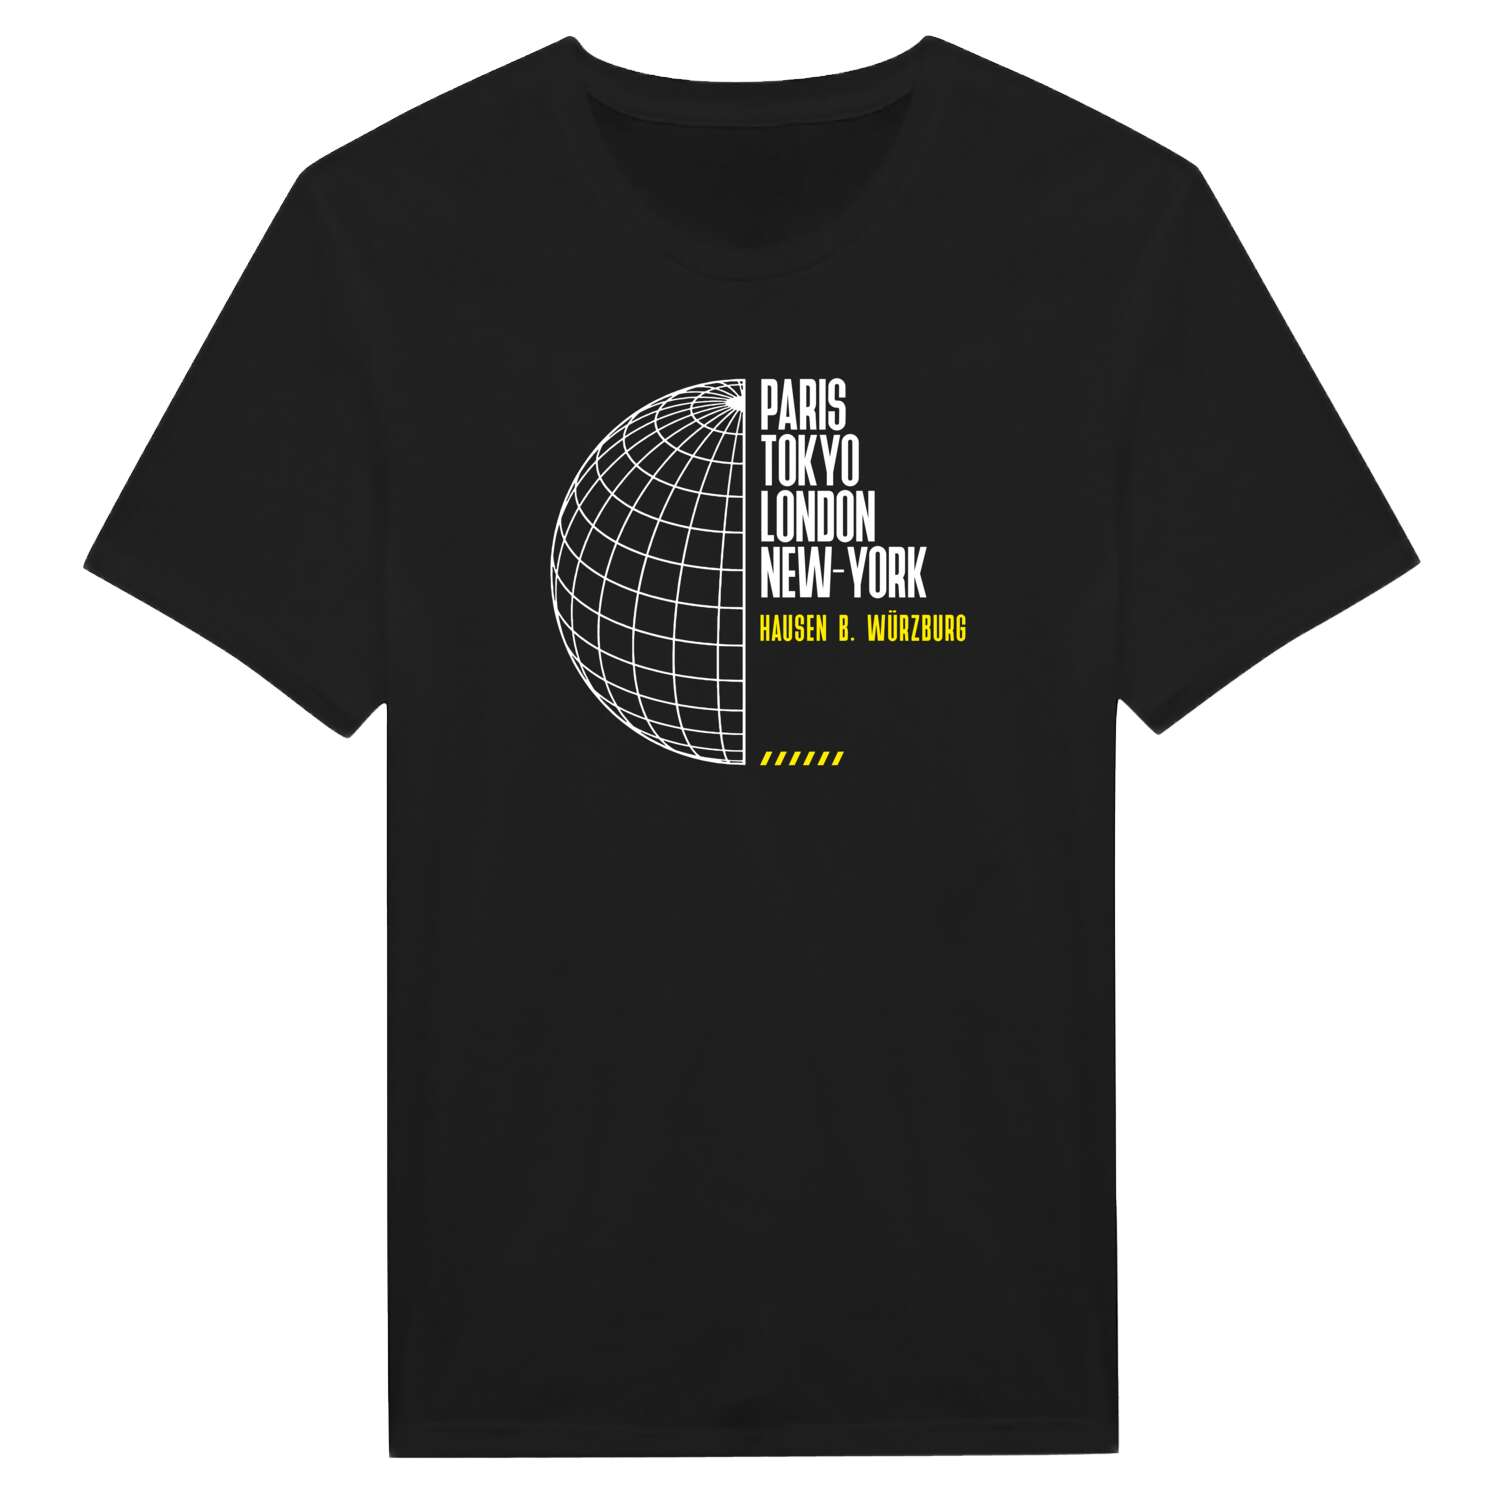 Hausen b. Würzburg T-Shirt »Paris Tokyo London«